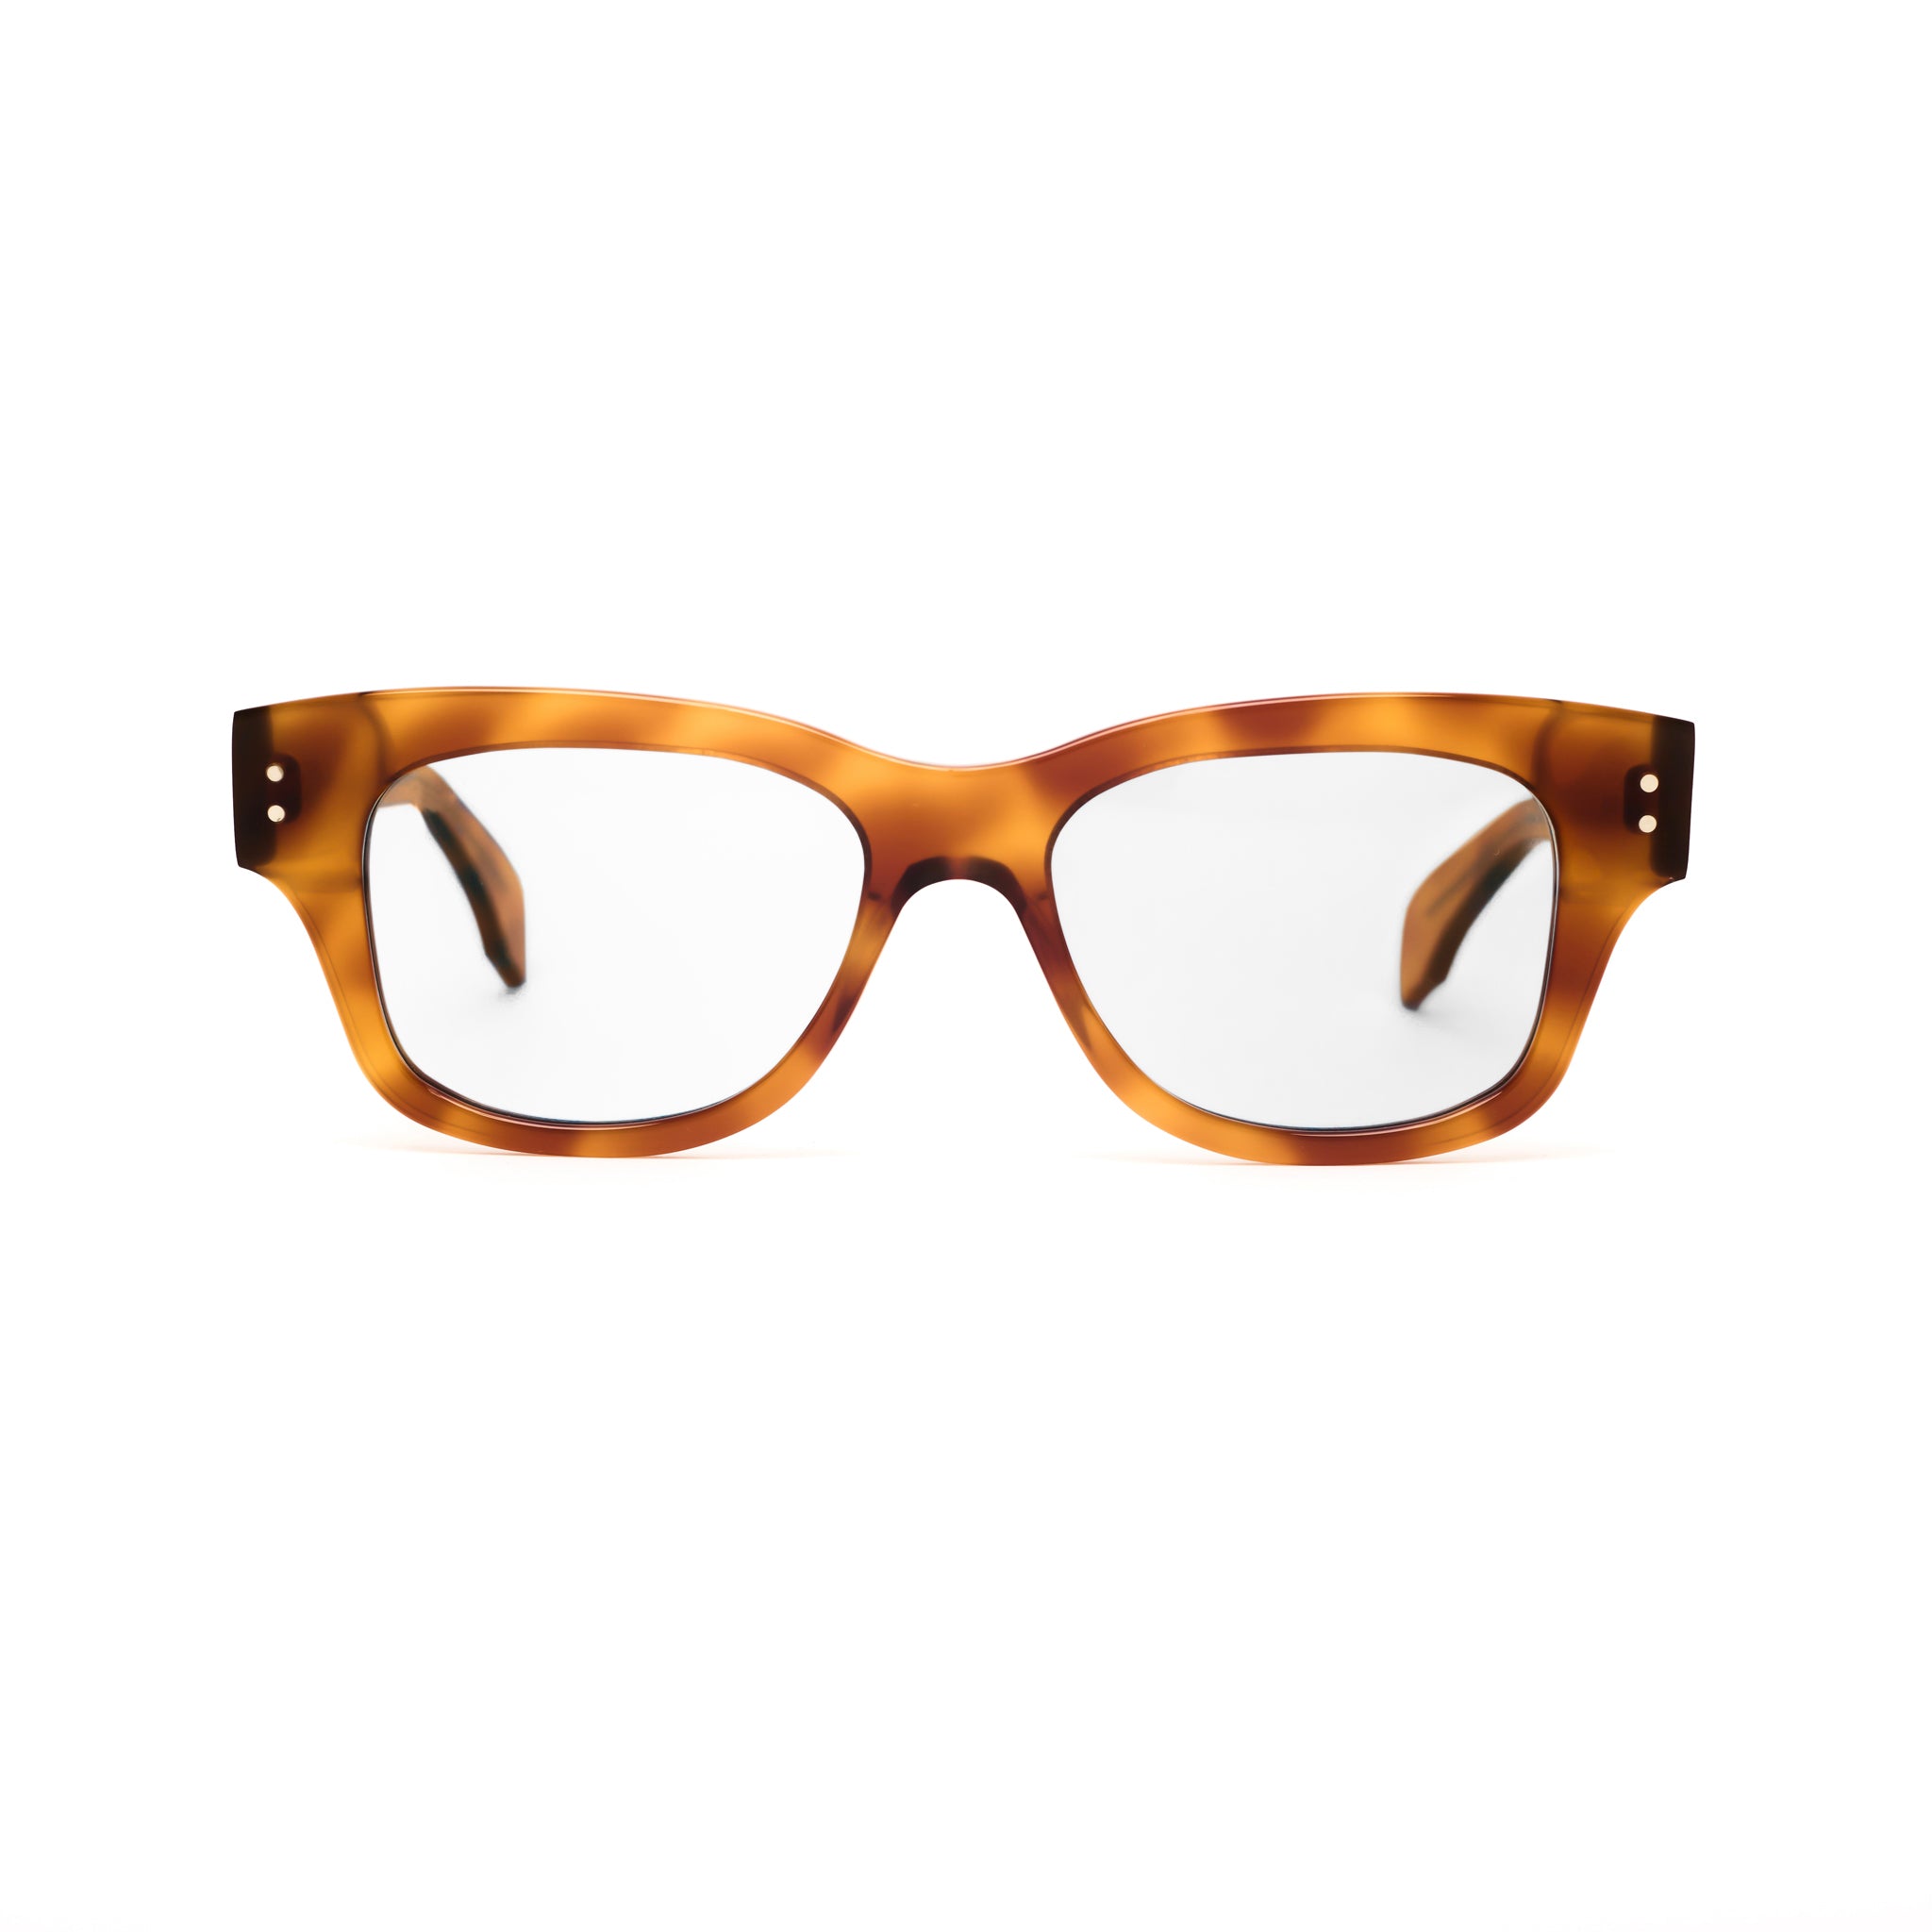 Ameos Forever collection Sam optical glasses. Tortoise frames and unisex eyewear.